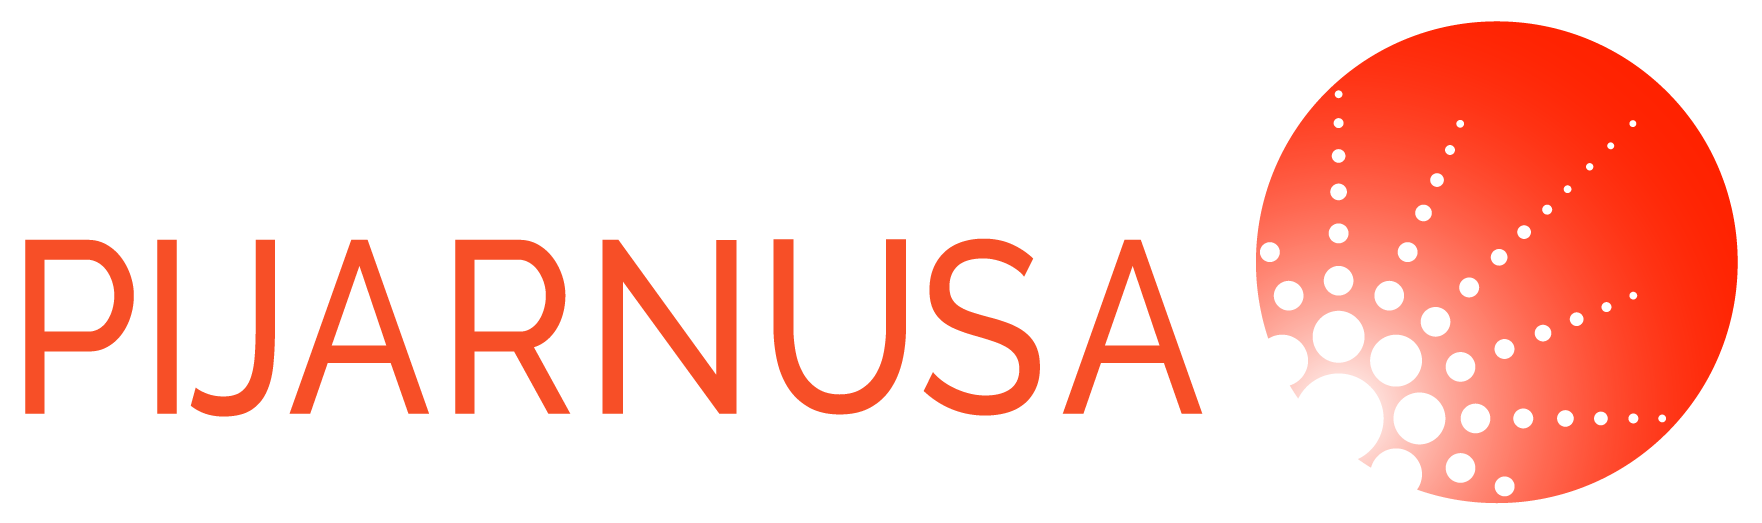 Yayasan Pijar Nusa